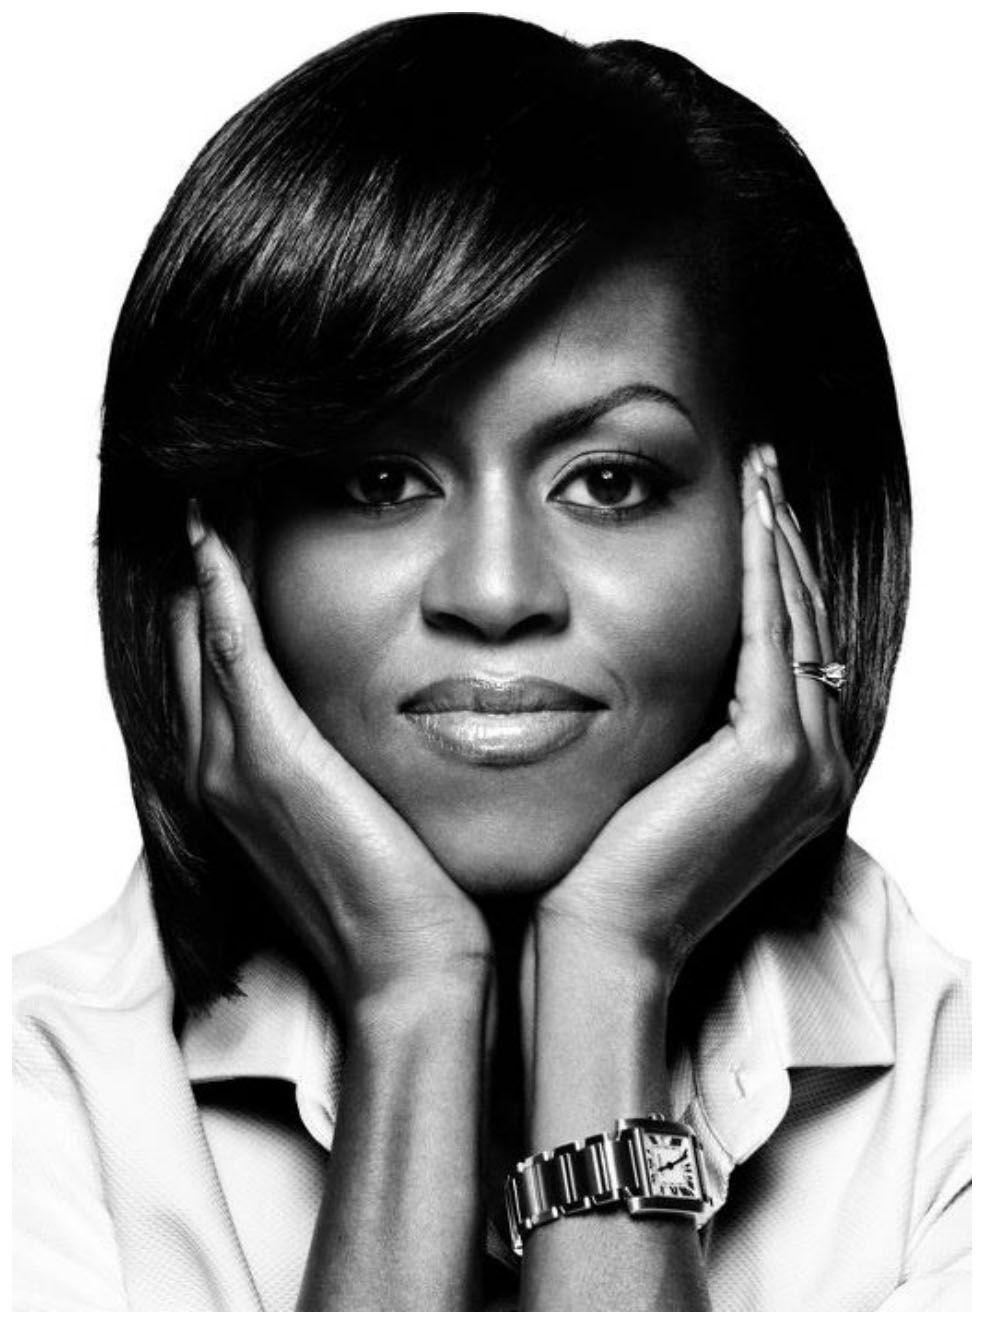 Michelle Obama Wallpaper for PC. Full HD Picture